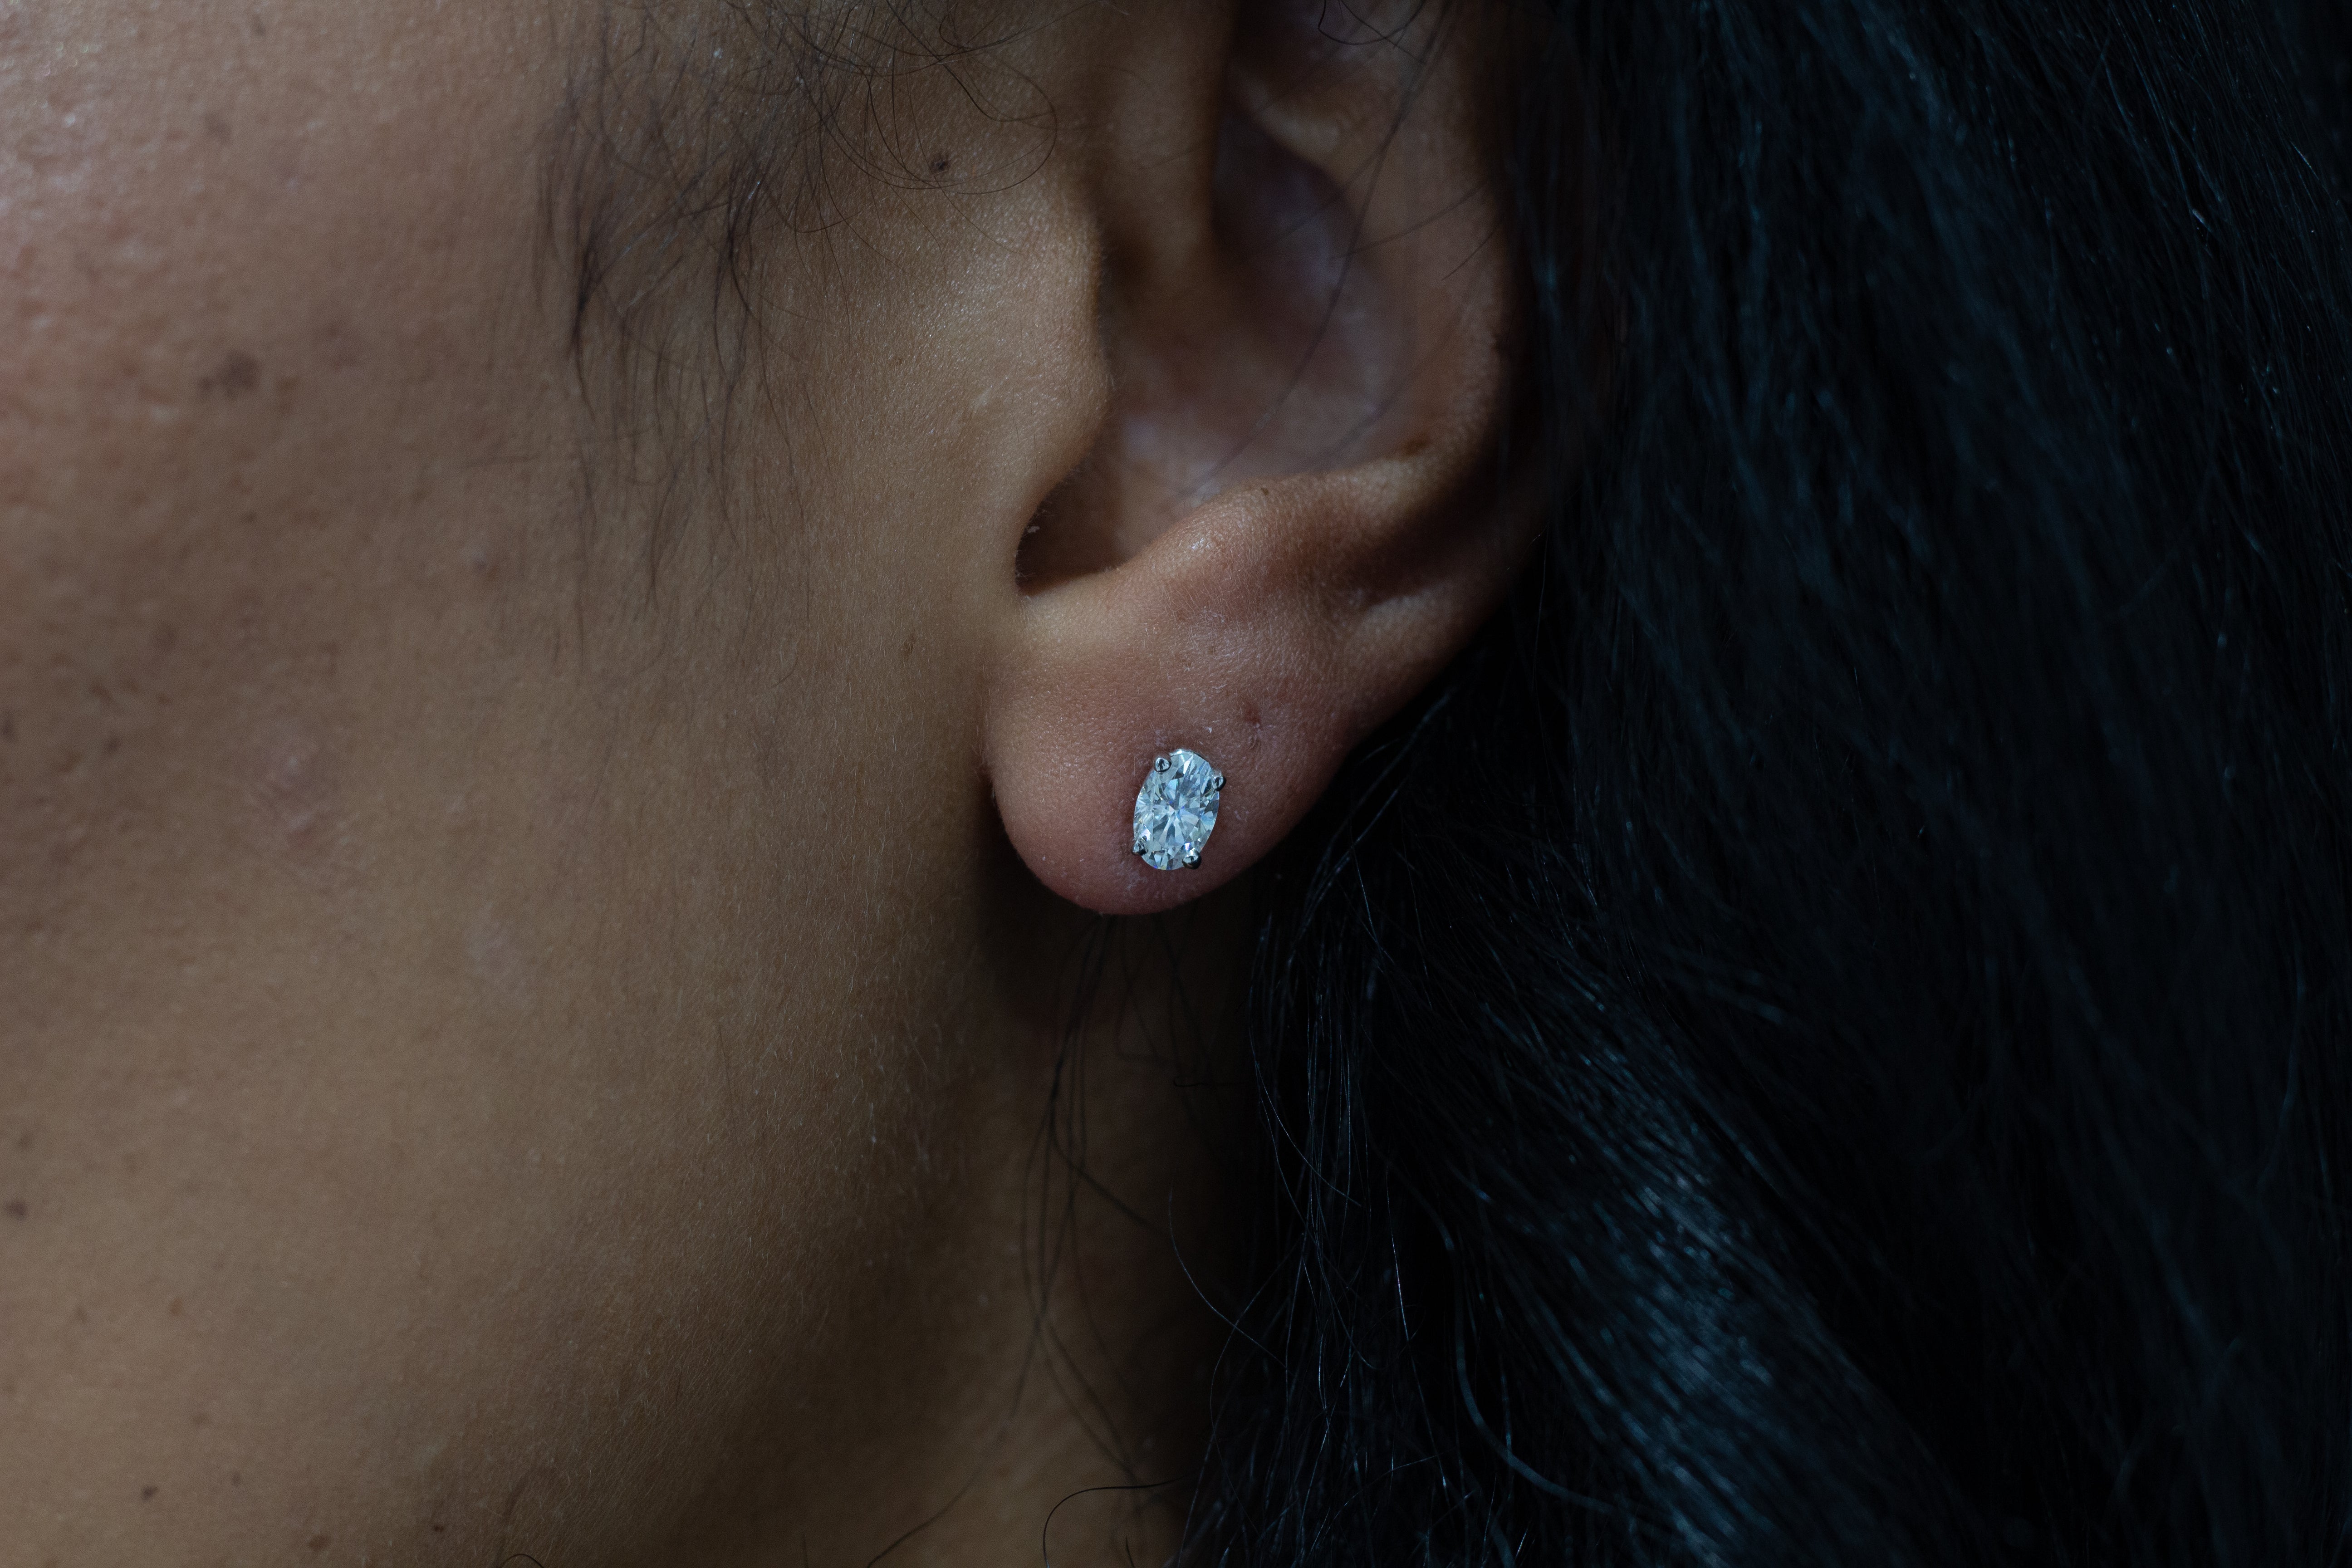 Diamond Earrings for sale in Houston, Texas | Facebook Marketplace |  Facebook